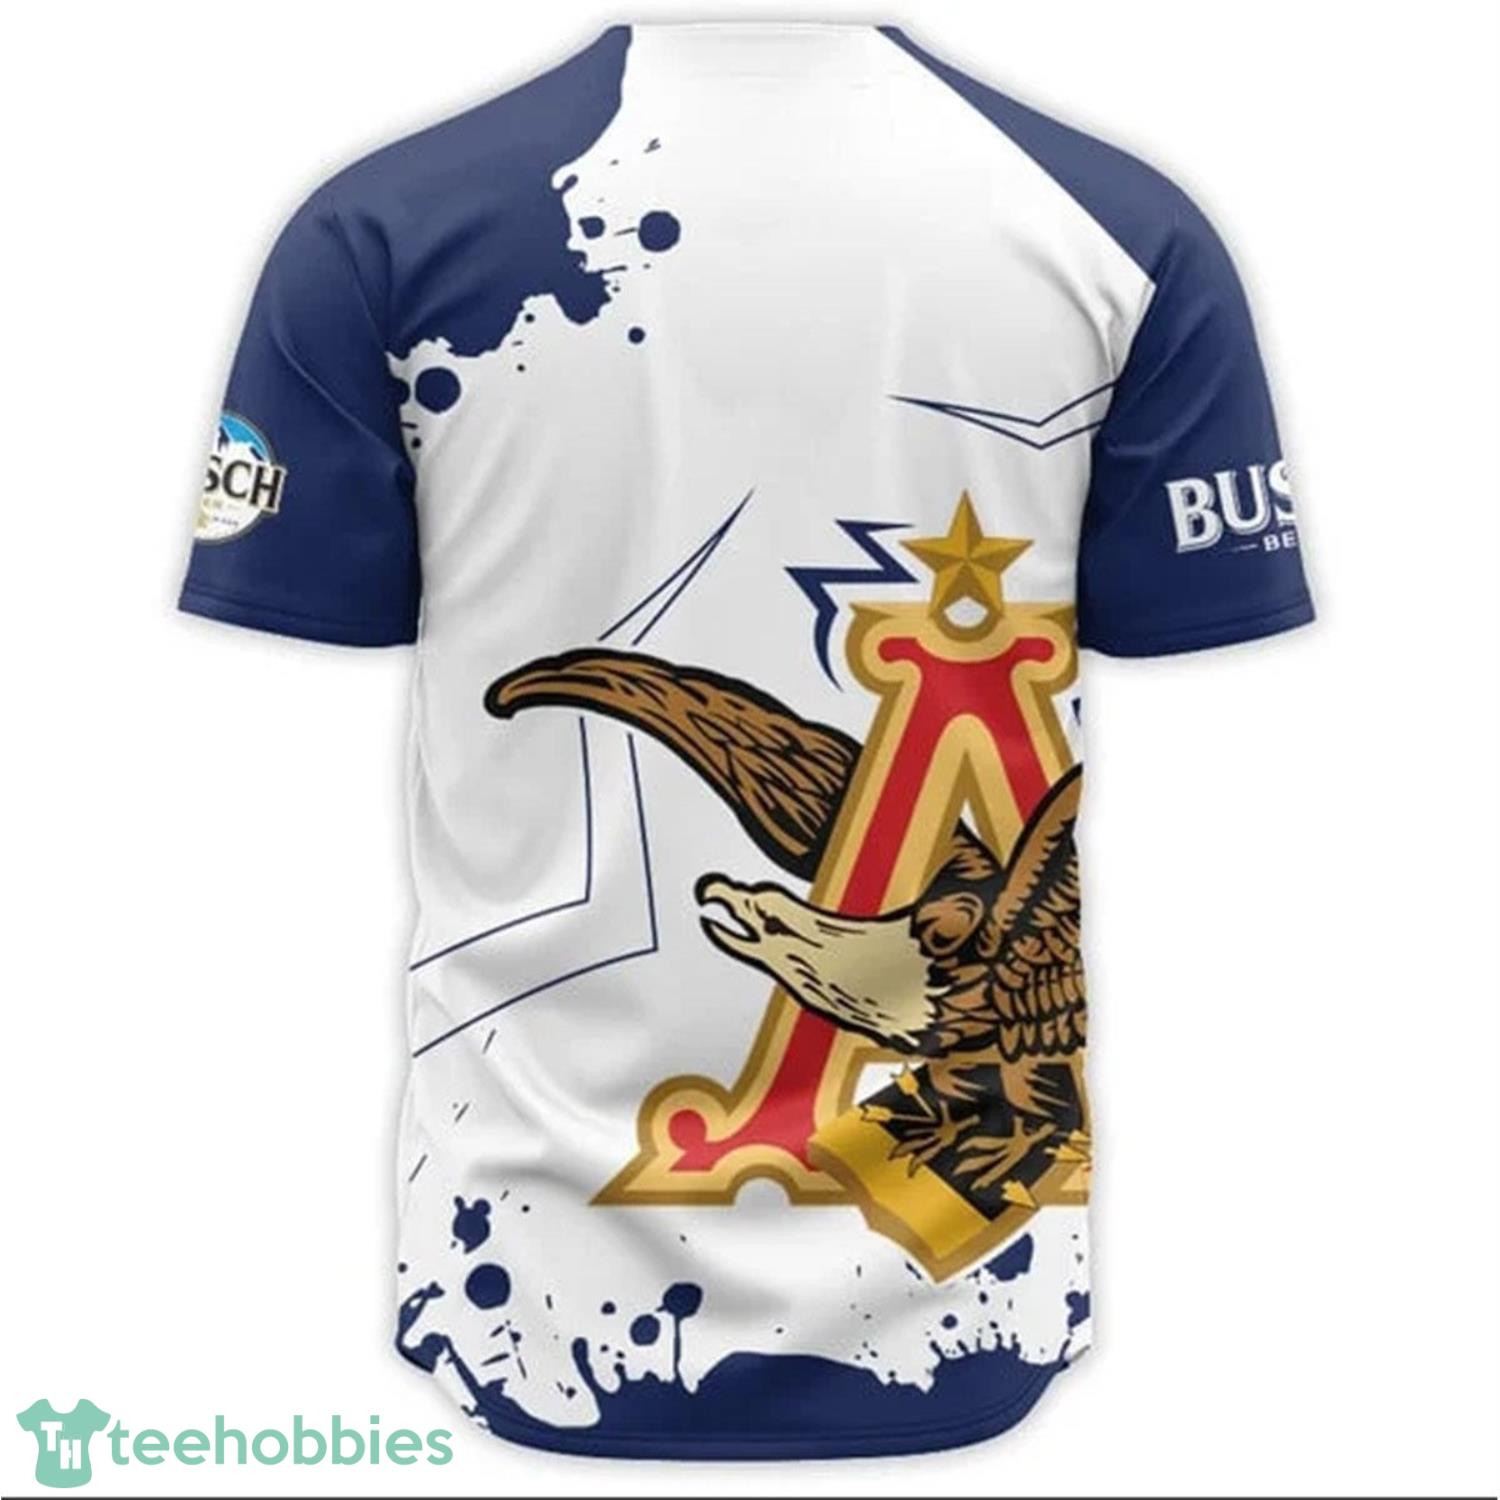 Busch Beer Anheuser Eagle Logo Baseball Jersey Shirt Product Photo 1